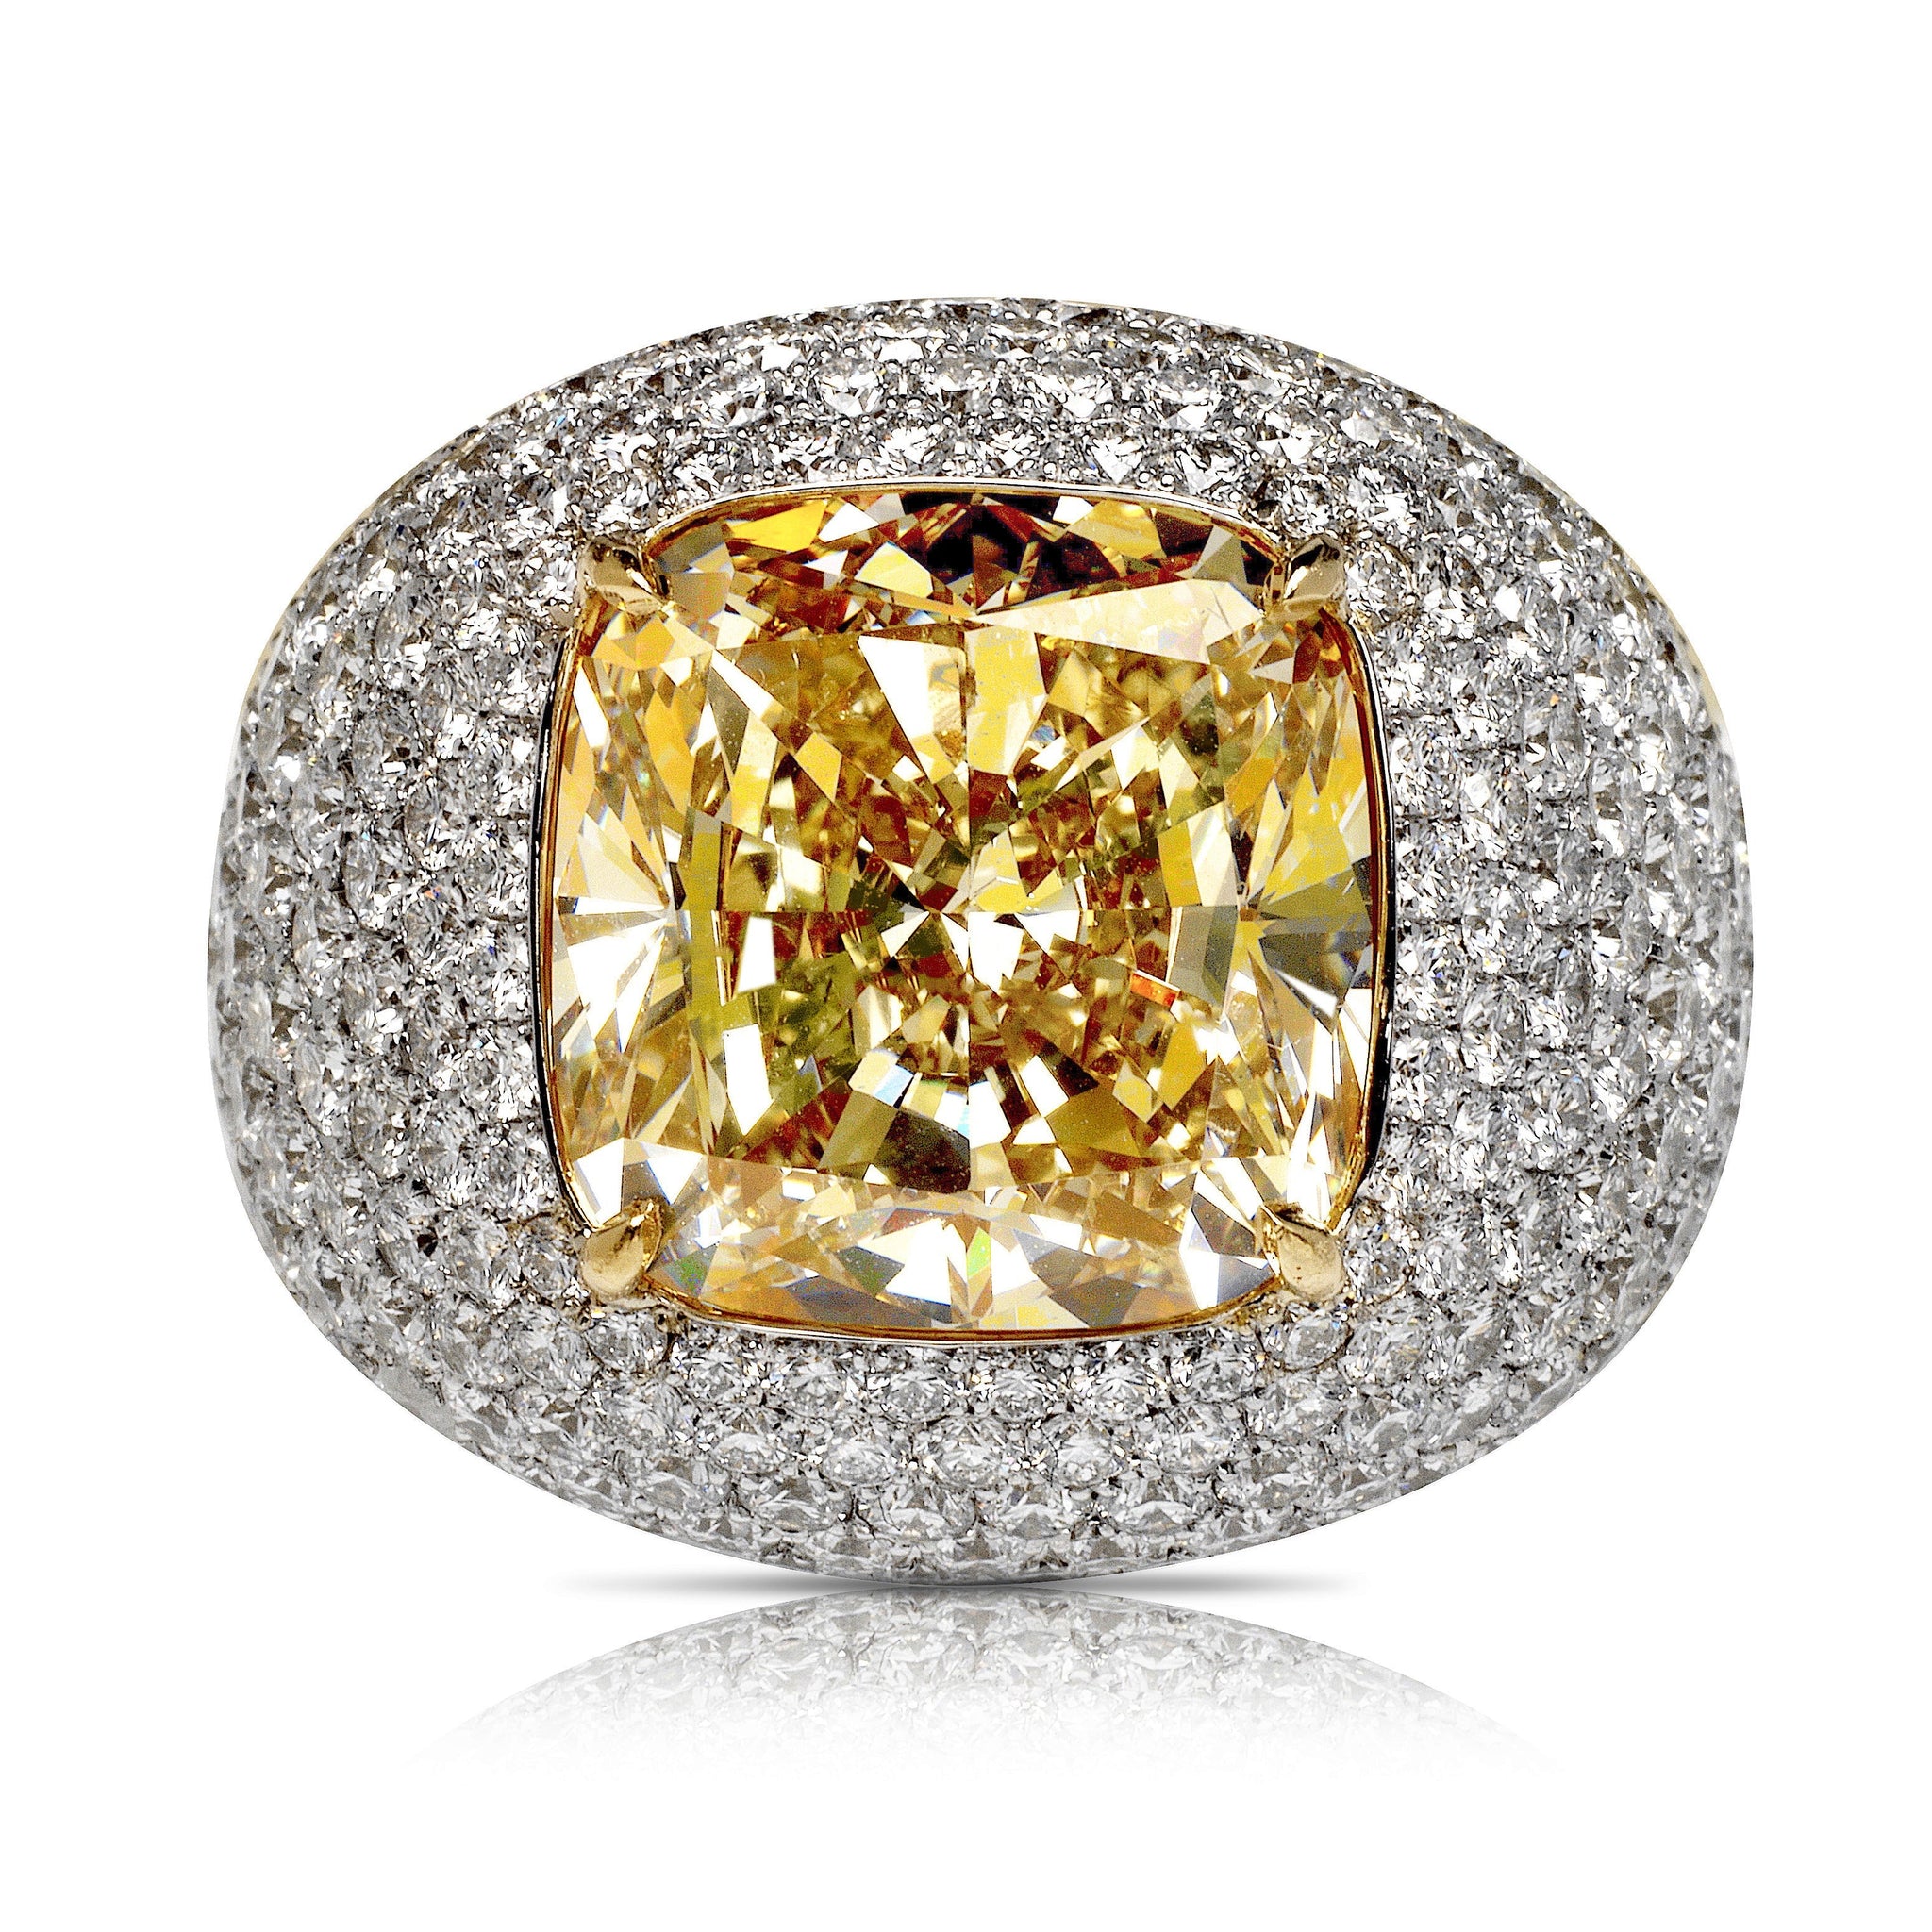 Yellow Diamond Ring Cushion Cut 24 Carat  Halo Ring in Platinum & 18K White Gold Front View